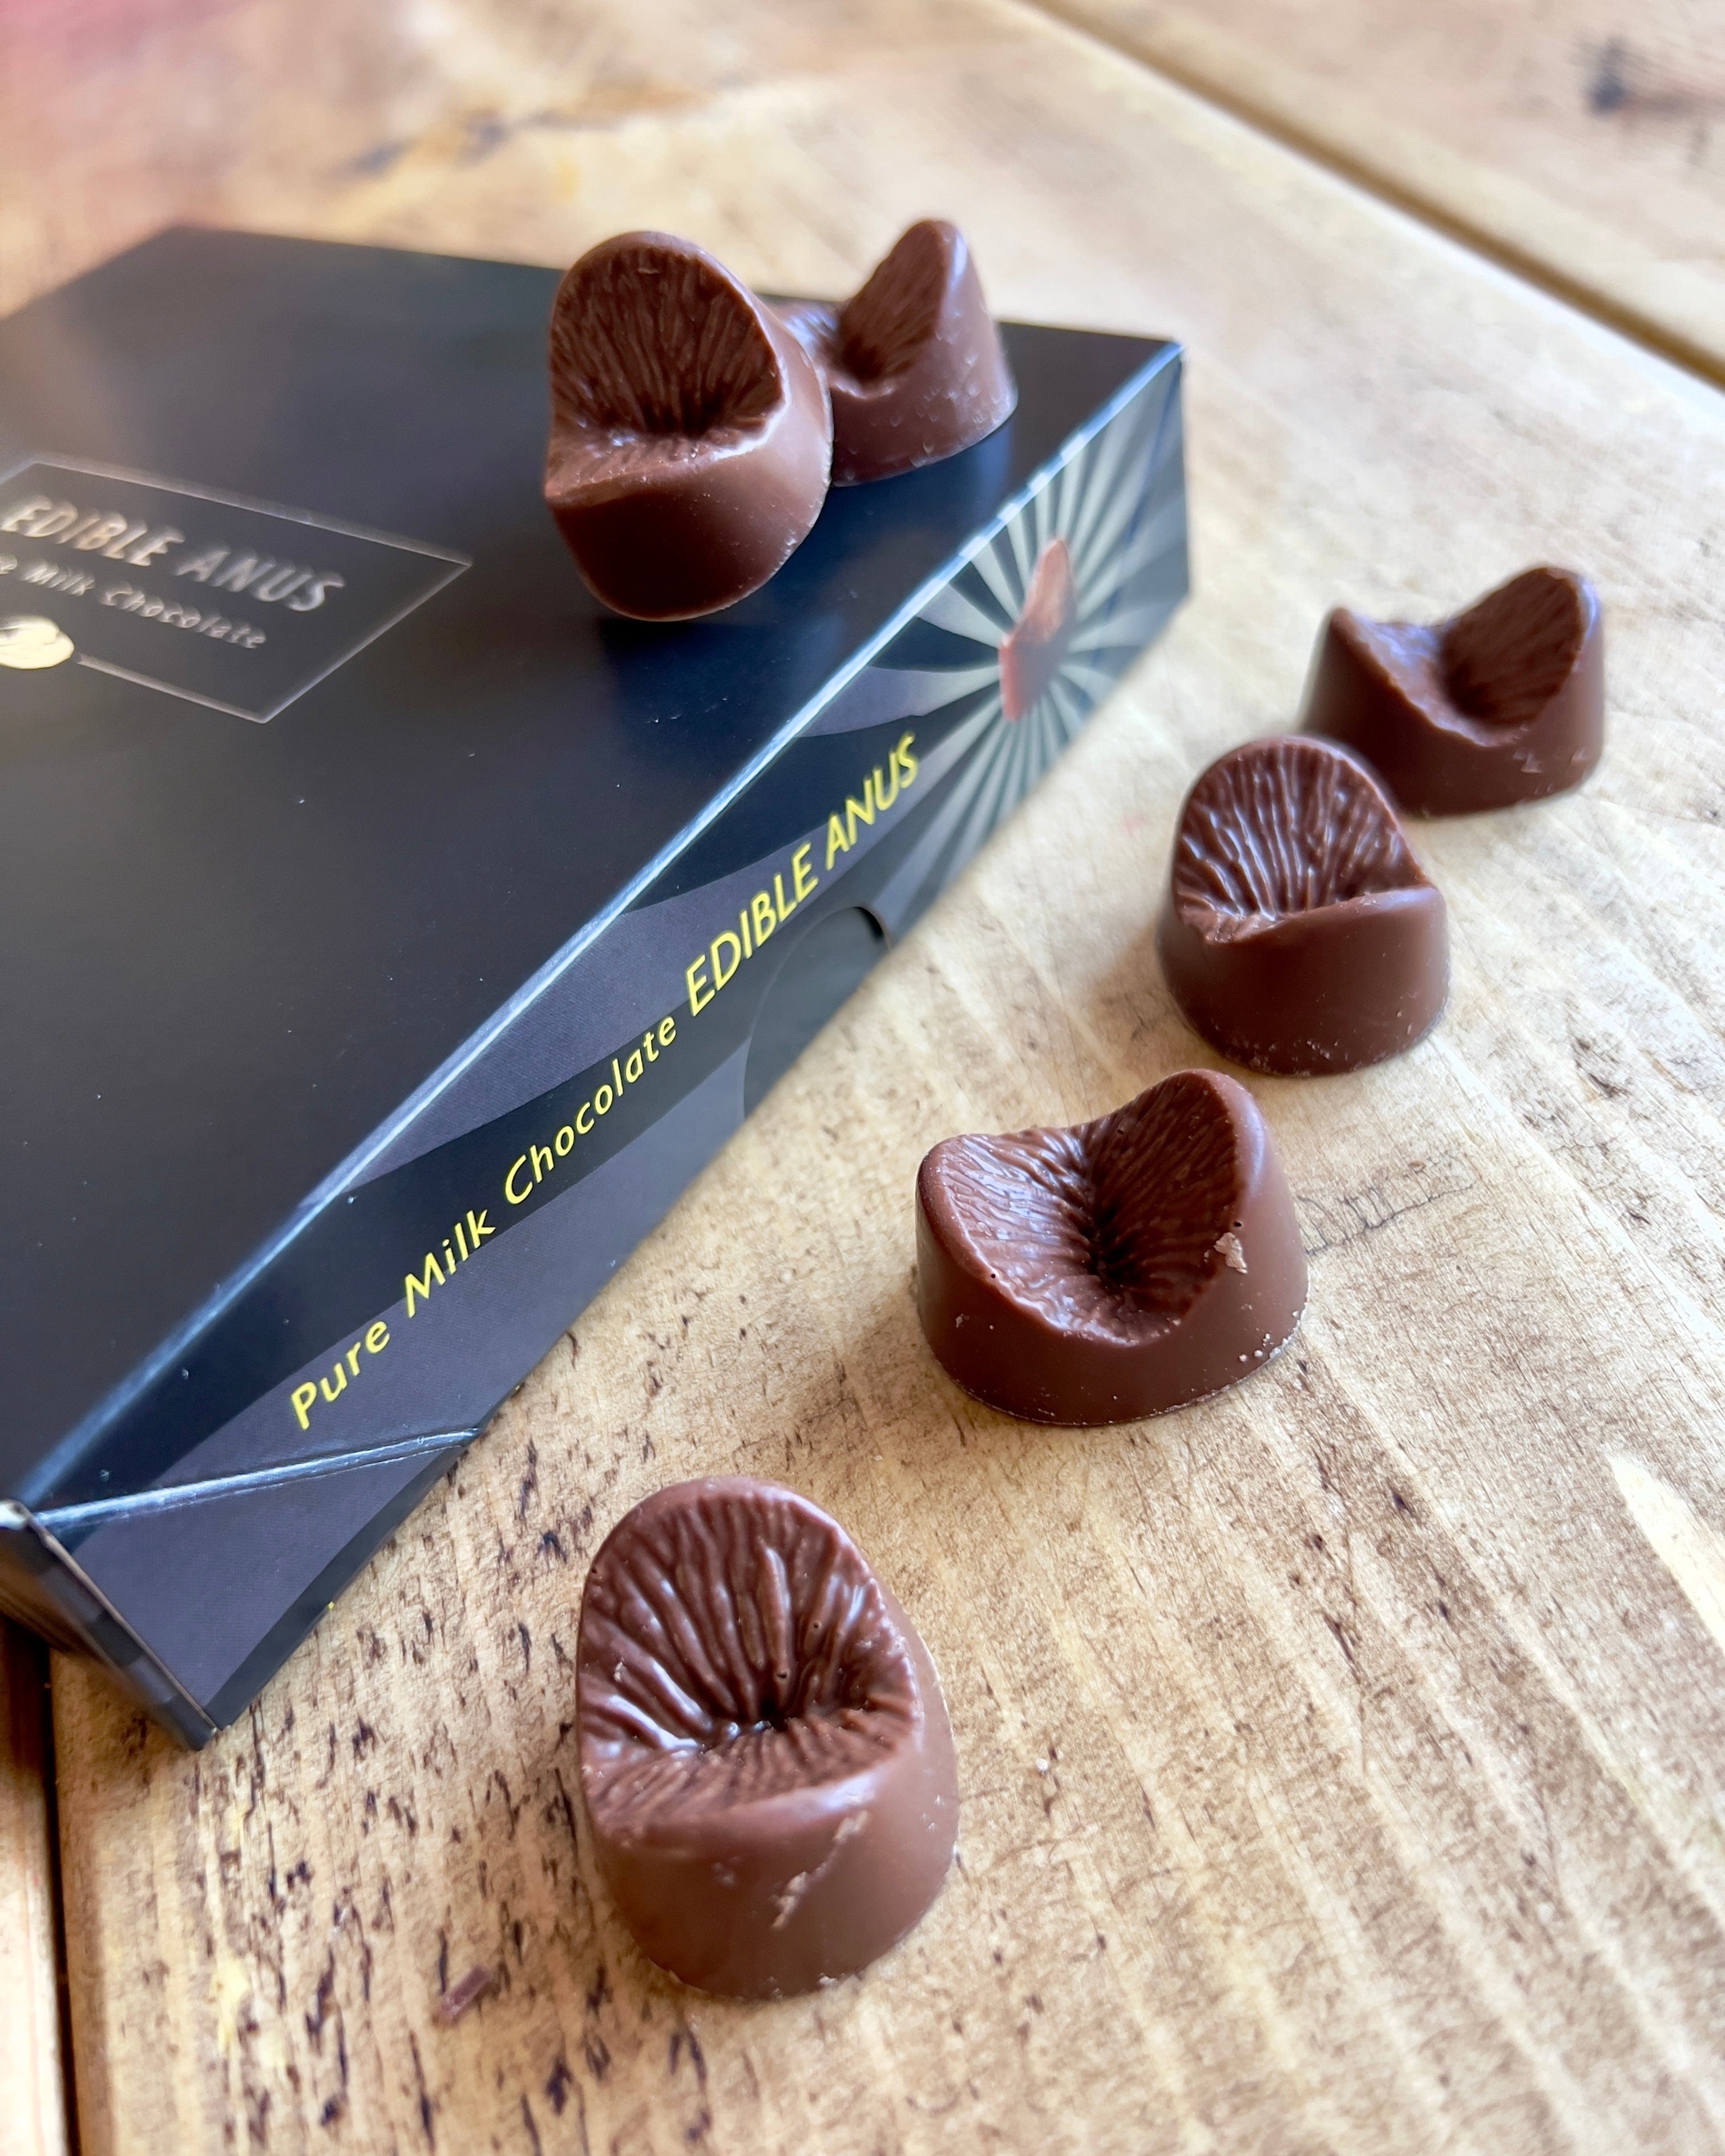 Edible Anus - the Chocolate Bumhole!